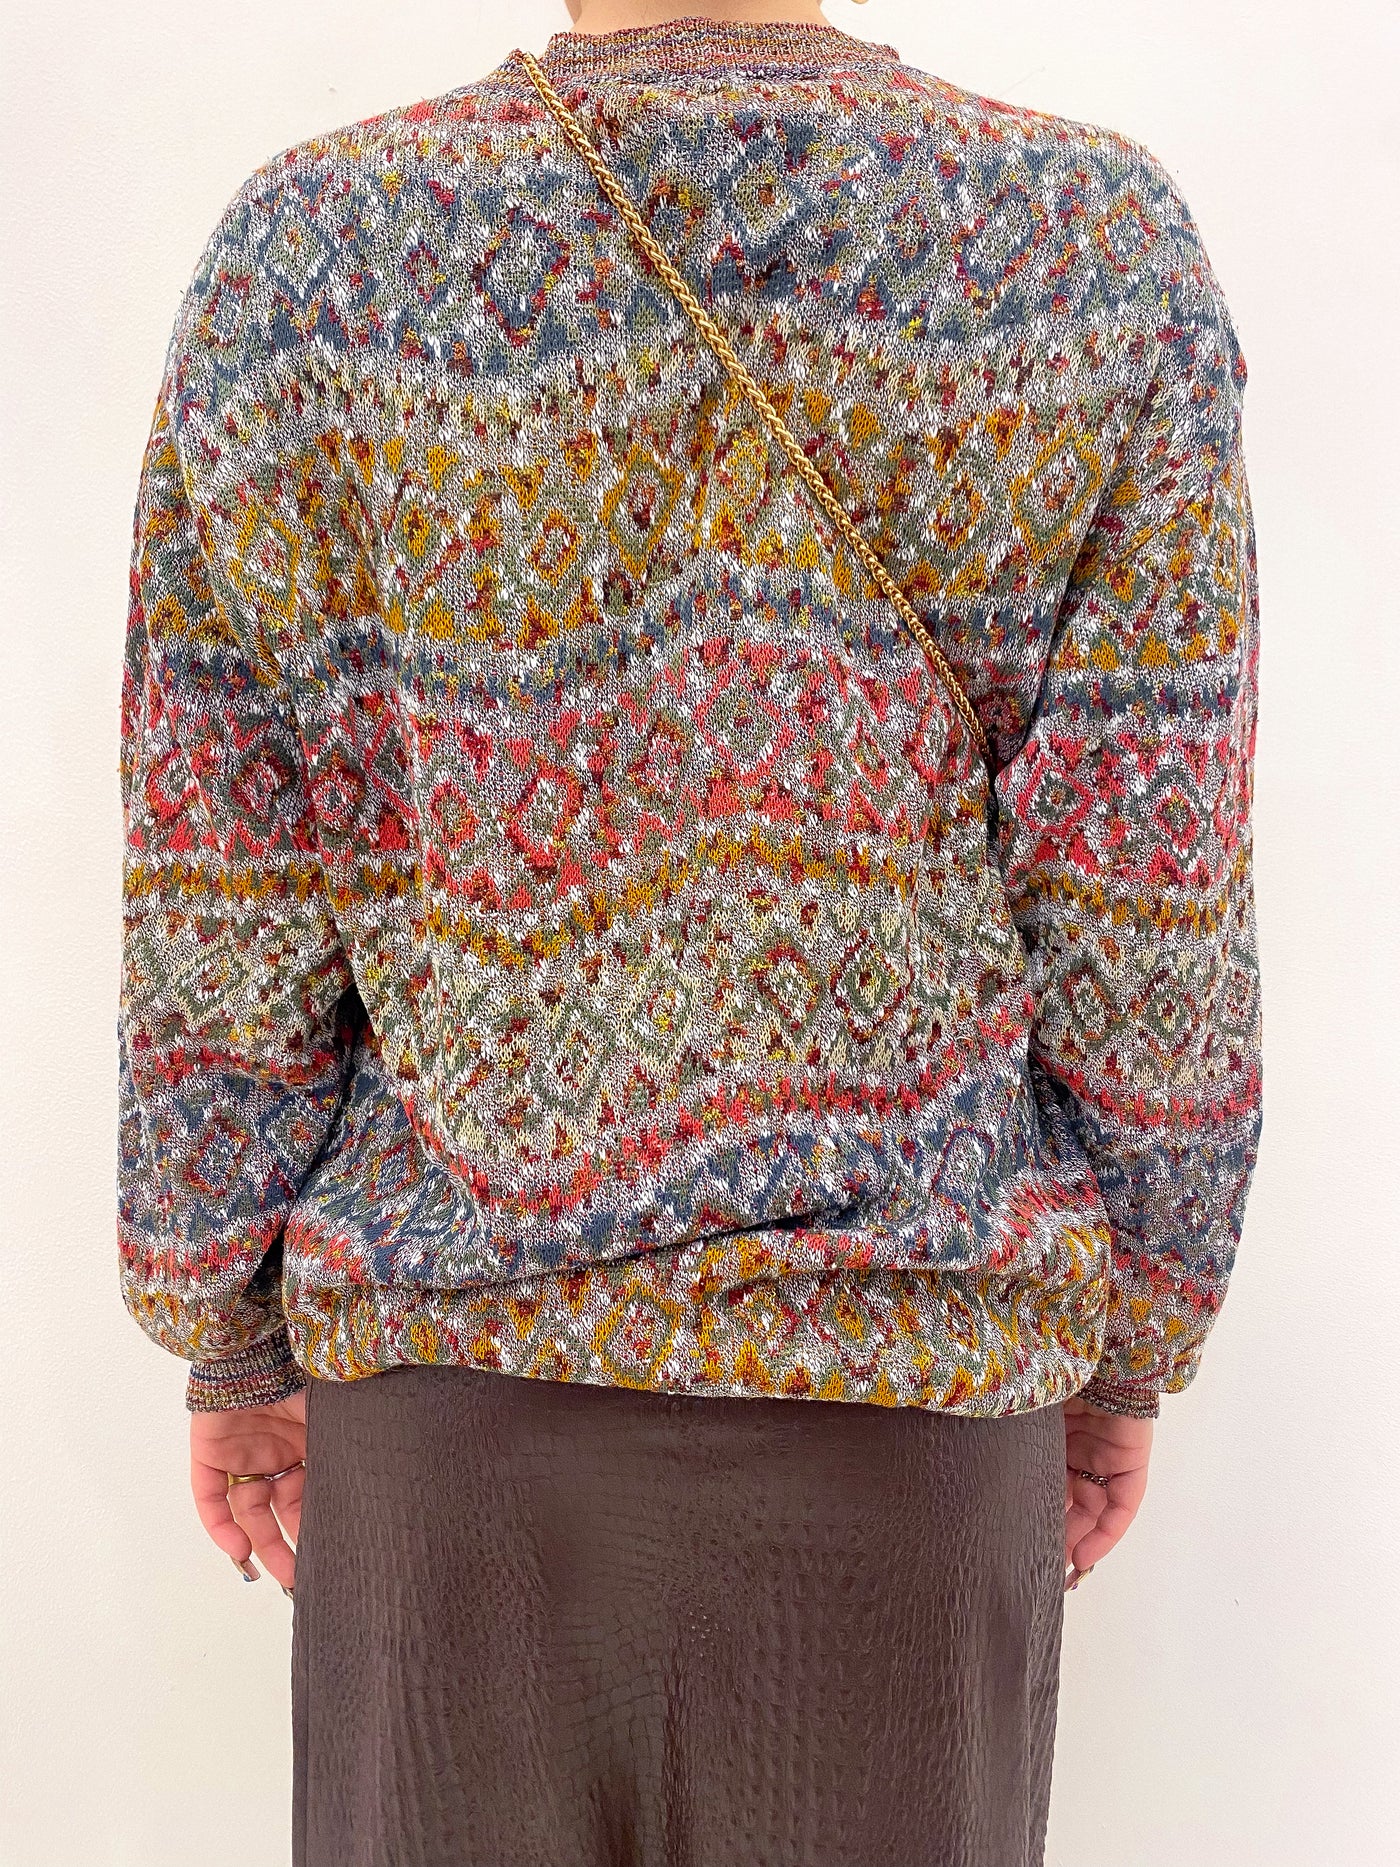 MISSONI 1980's Chevron Sweater Size XL